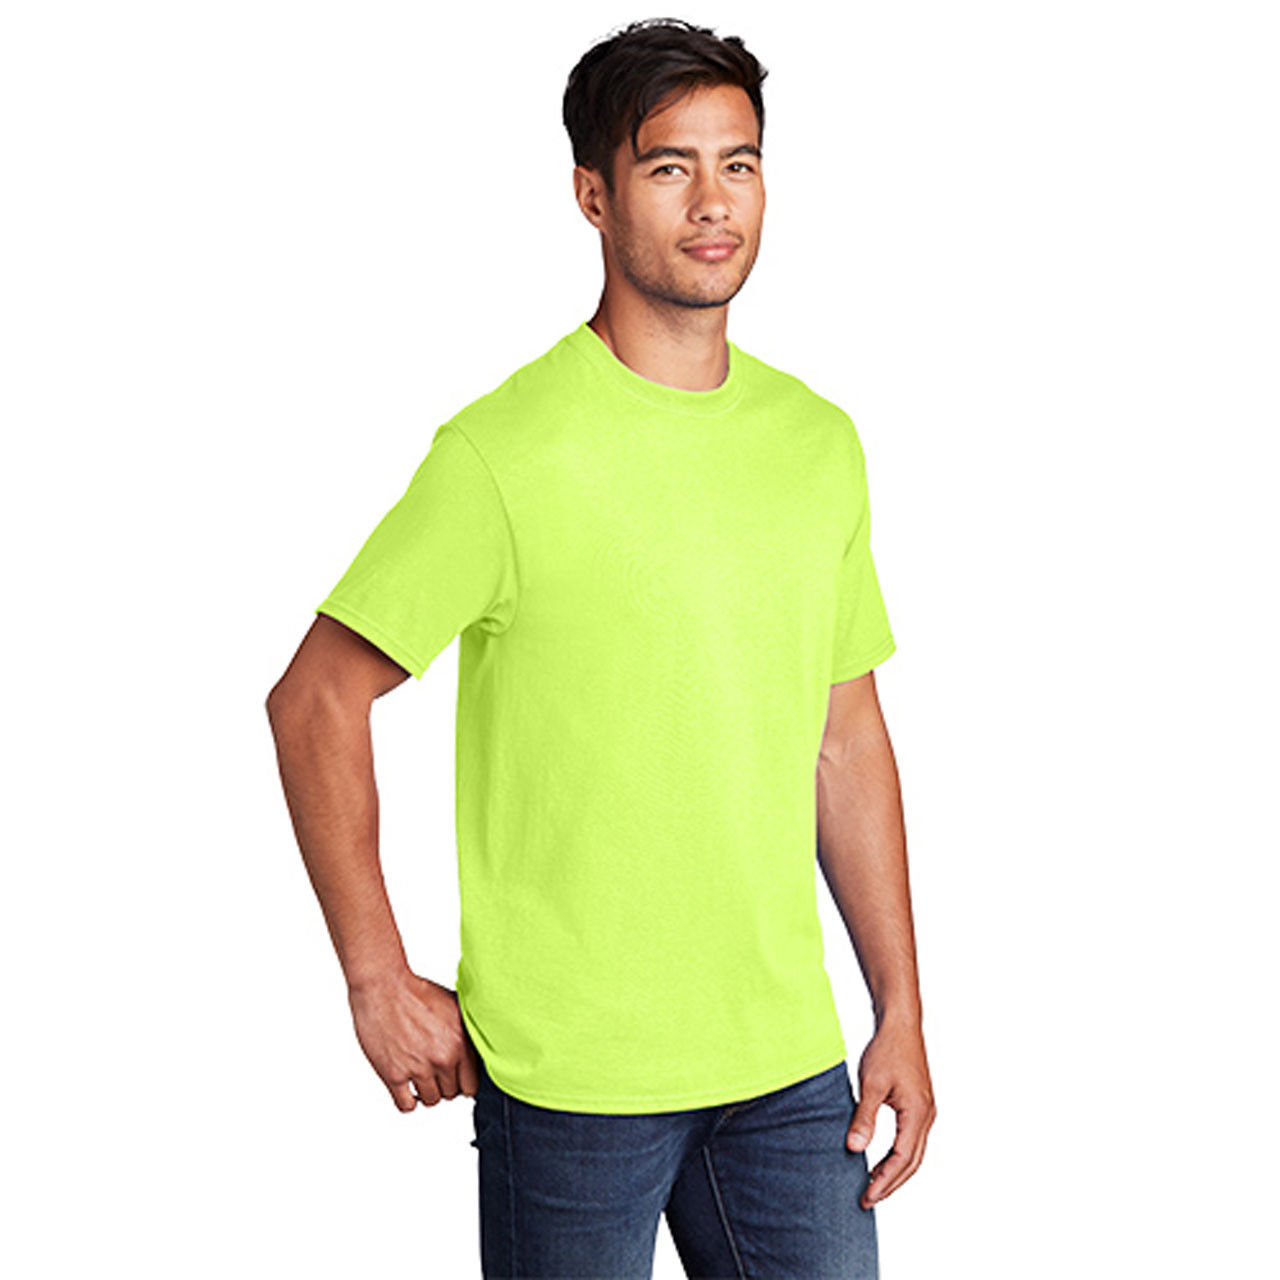 Wholesale Men's Core Cotton T-Shirt - Neon Yellow PC54, Case of 72 Questions & Answers